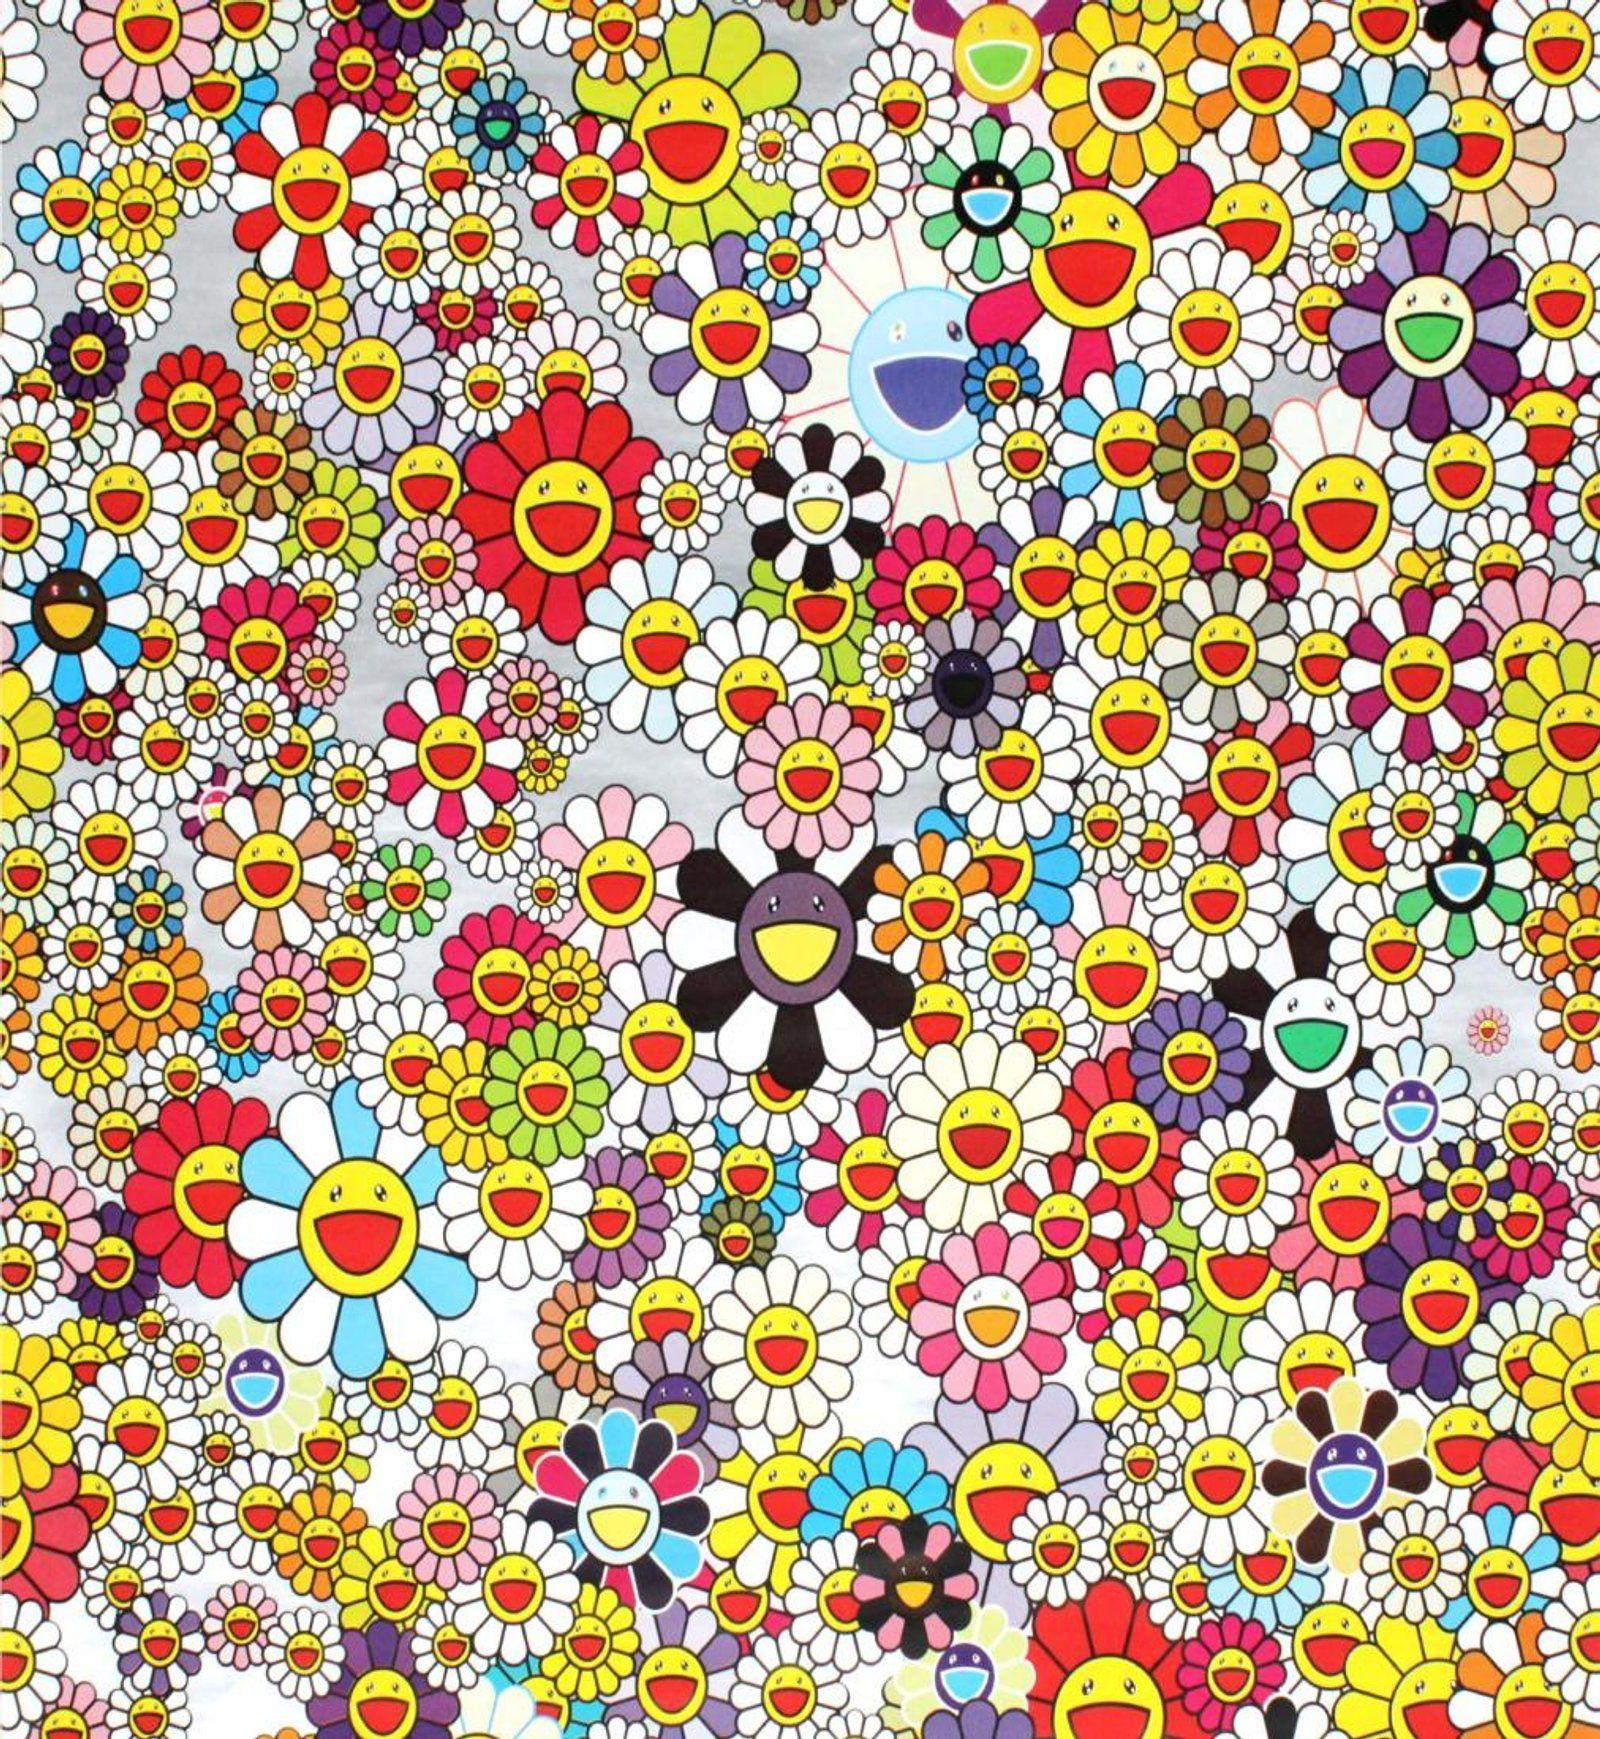 Takashi Murakami Wallpapers - Top Free Takashi Murakami